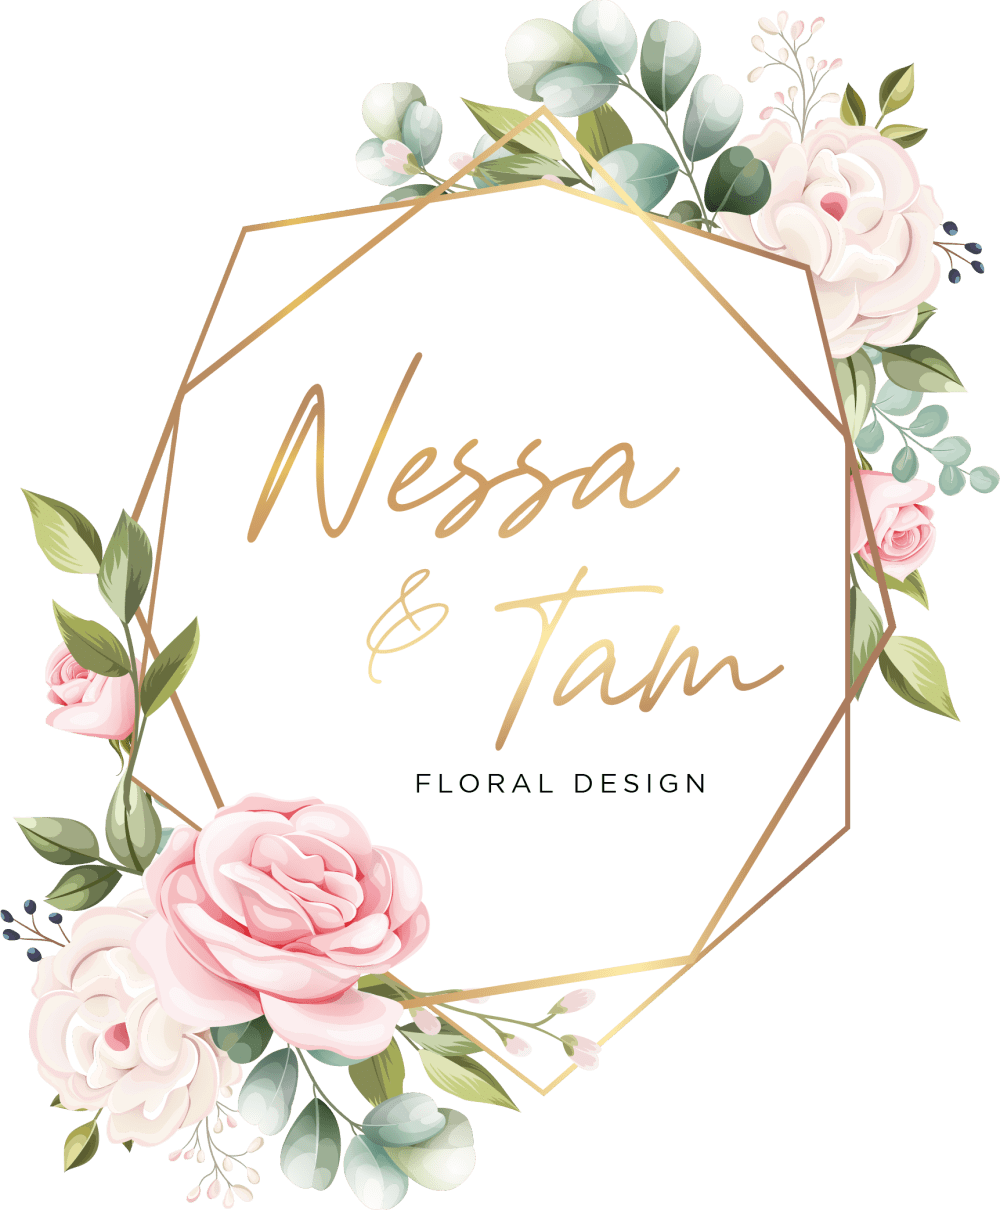 Nessa & Tam Floral Design - Costa Mesa, CA florist